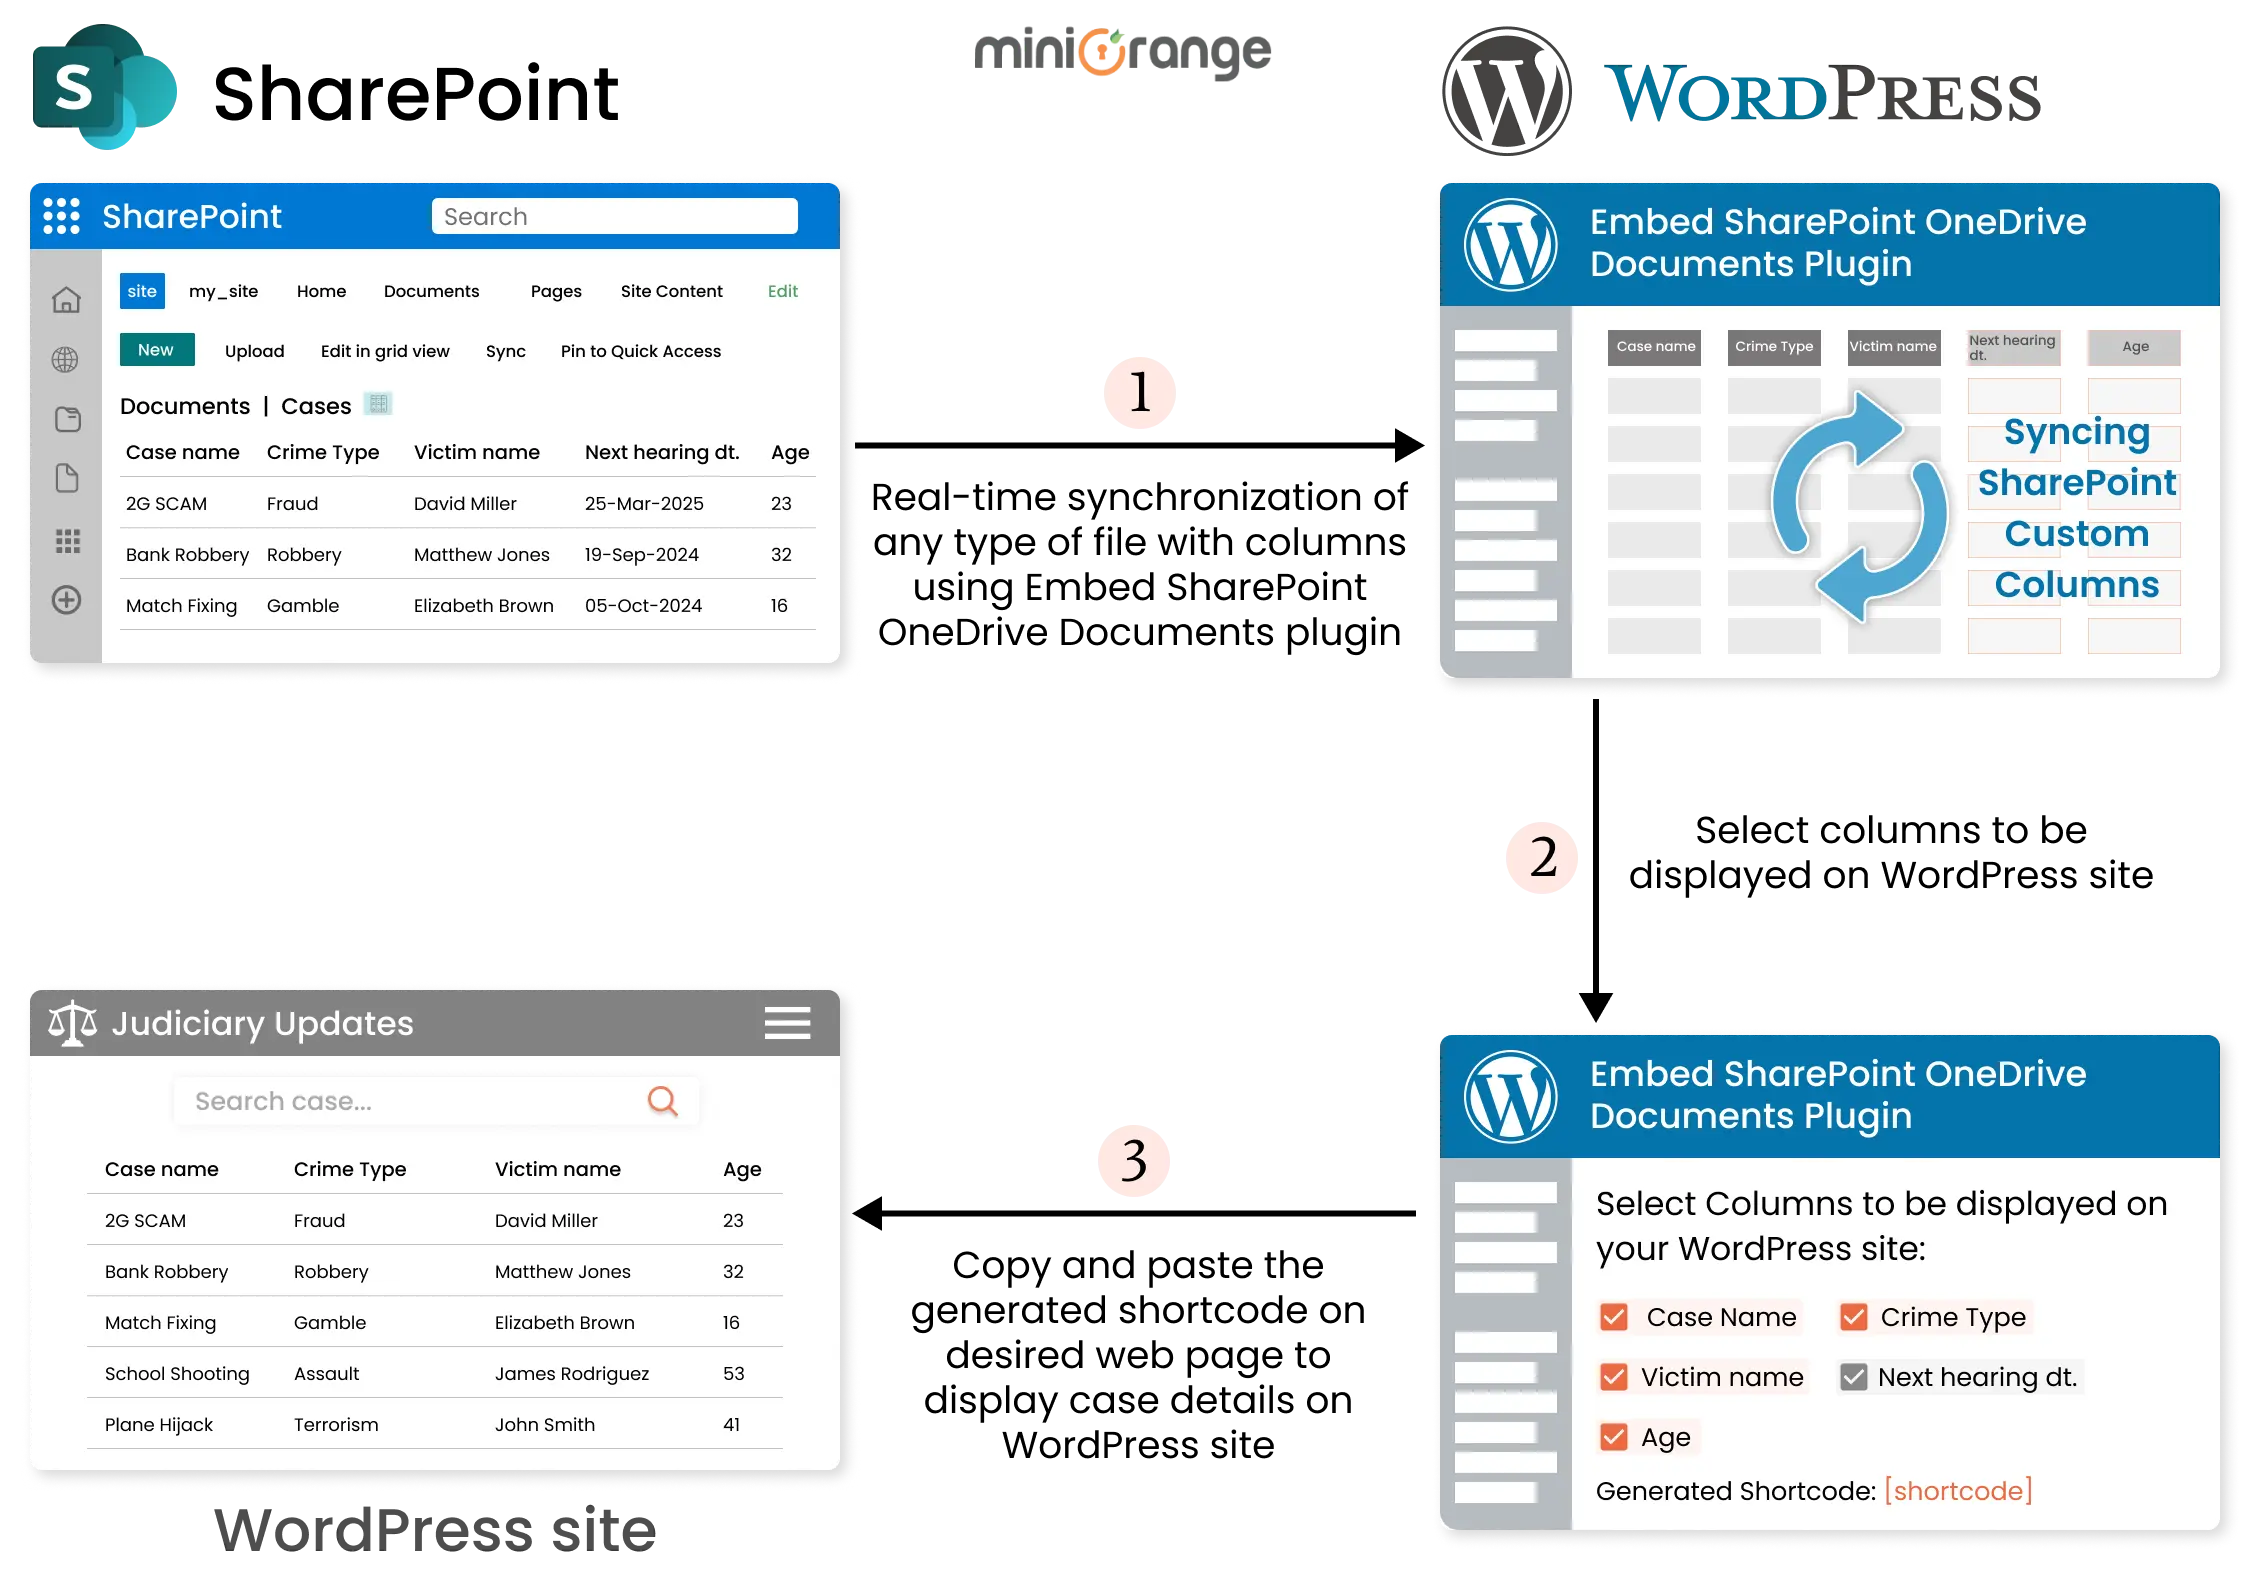 Display SharePoint Custom Columns on WP site | Workflow